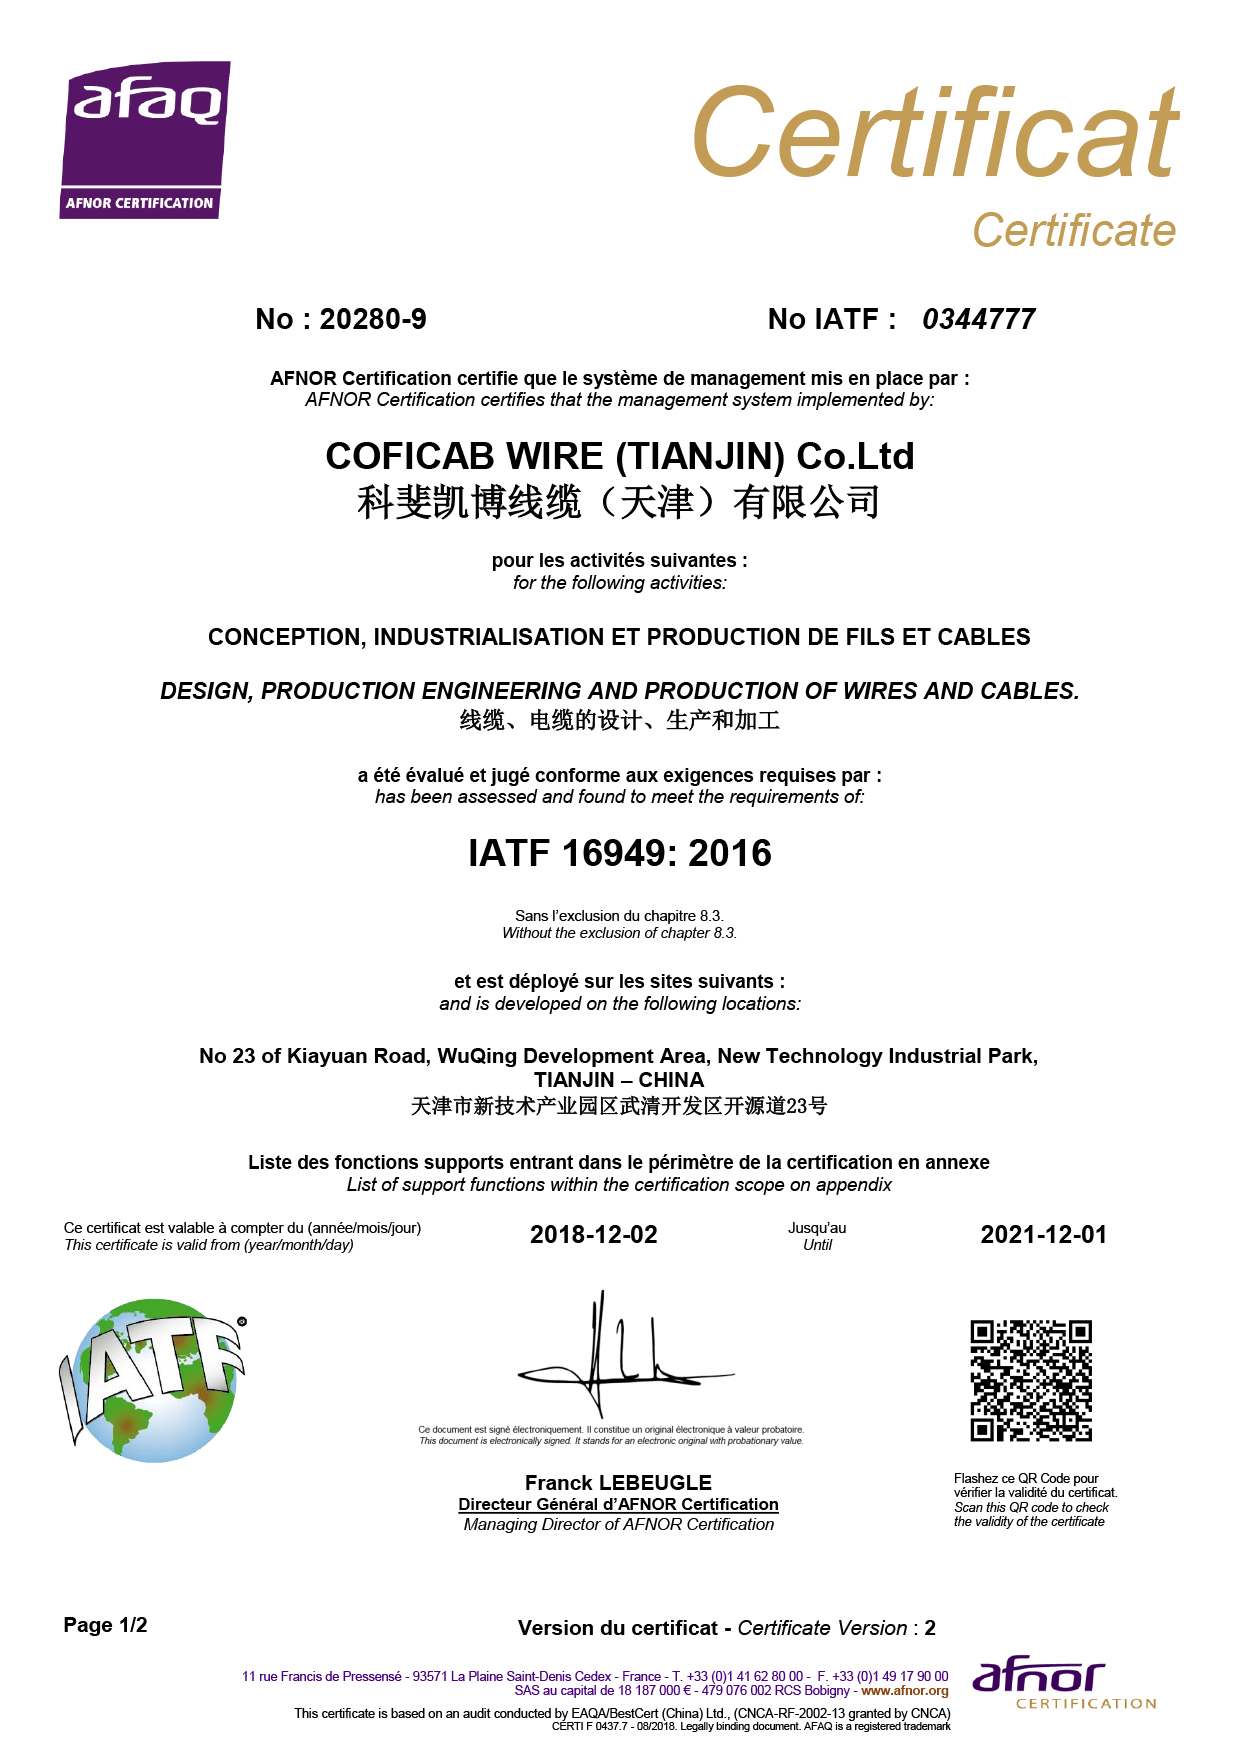 CERTI F 0437 Certificat IATF 16949